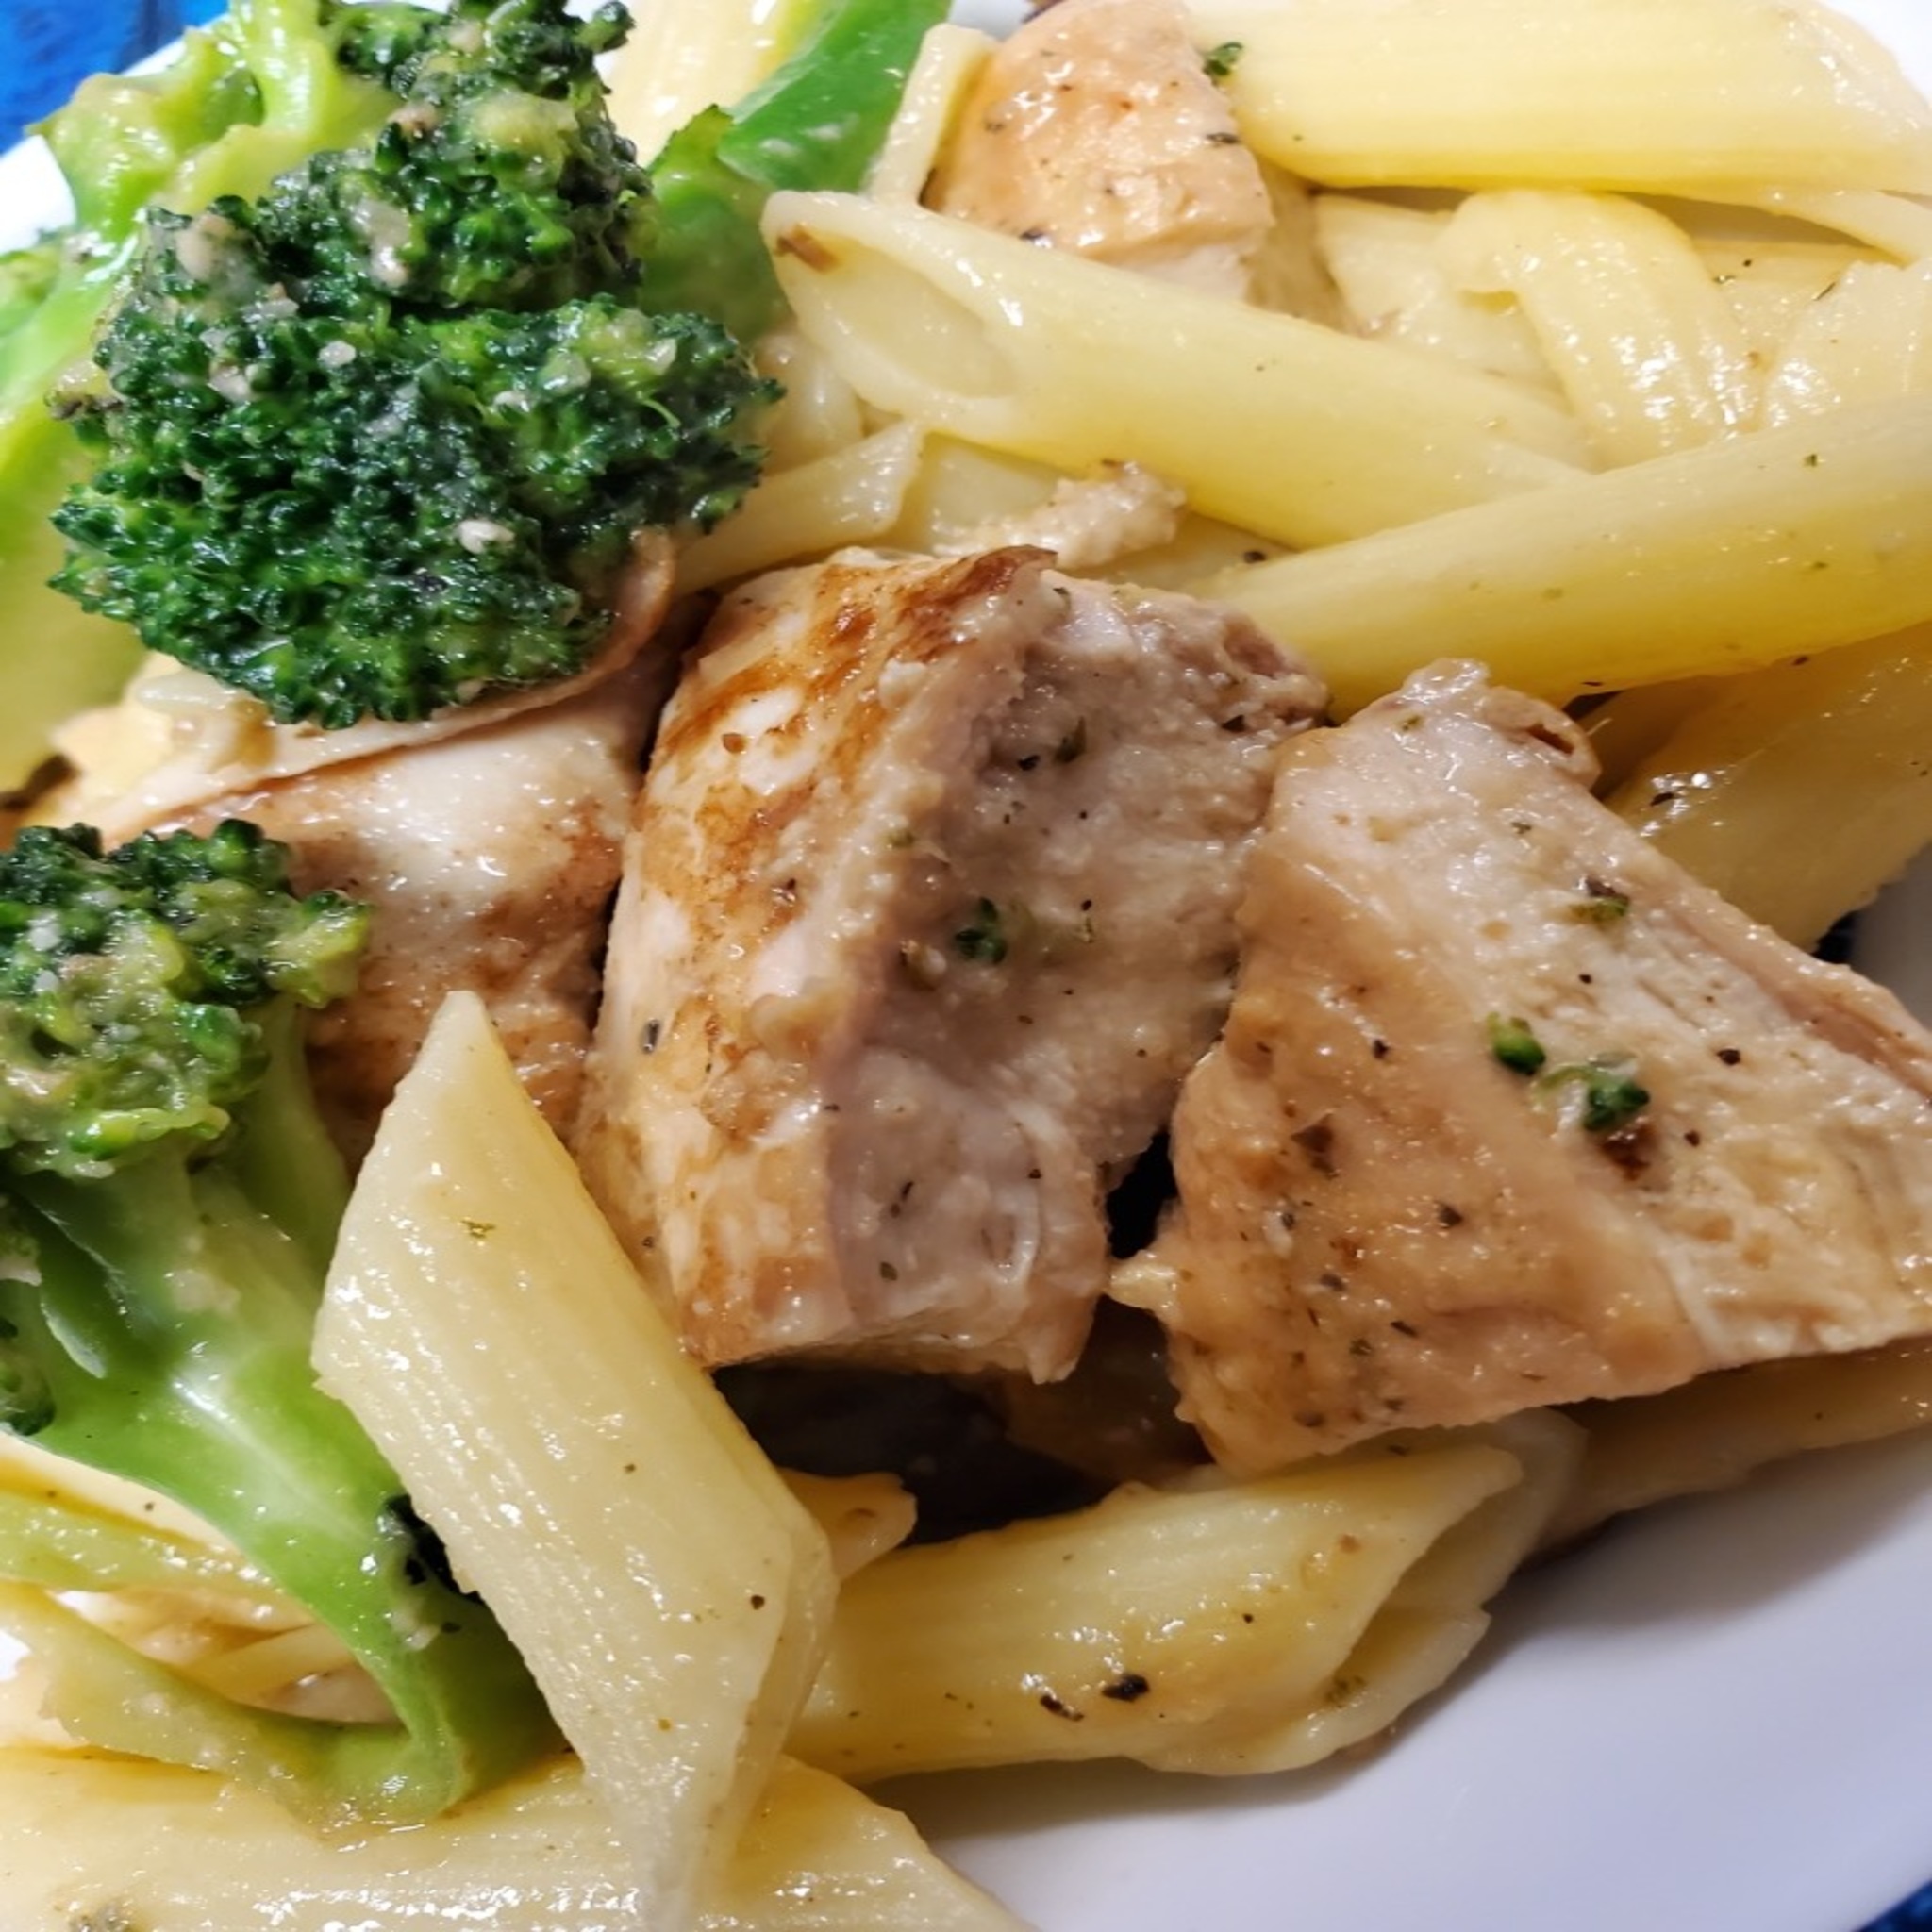 Chicken, Broccoli & GLUTEN FREE Penne Pasta - Healthy, Fresh, And